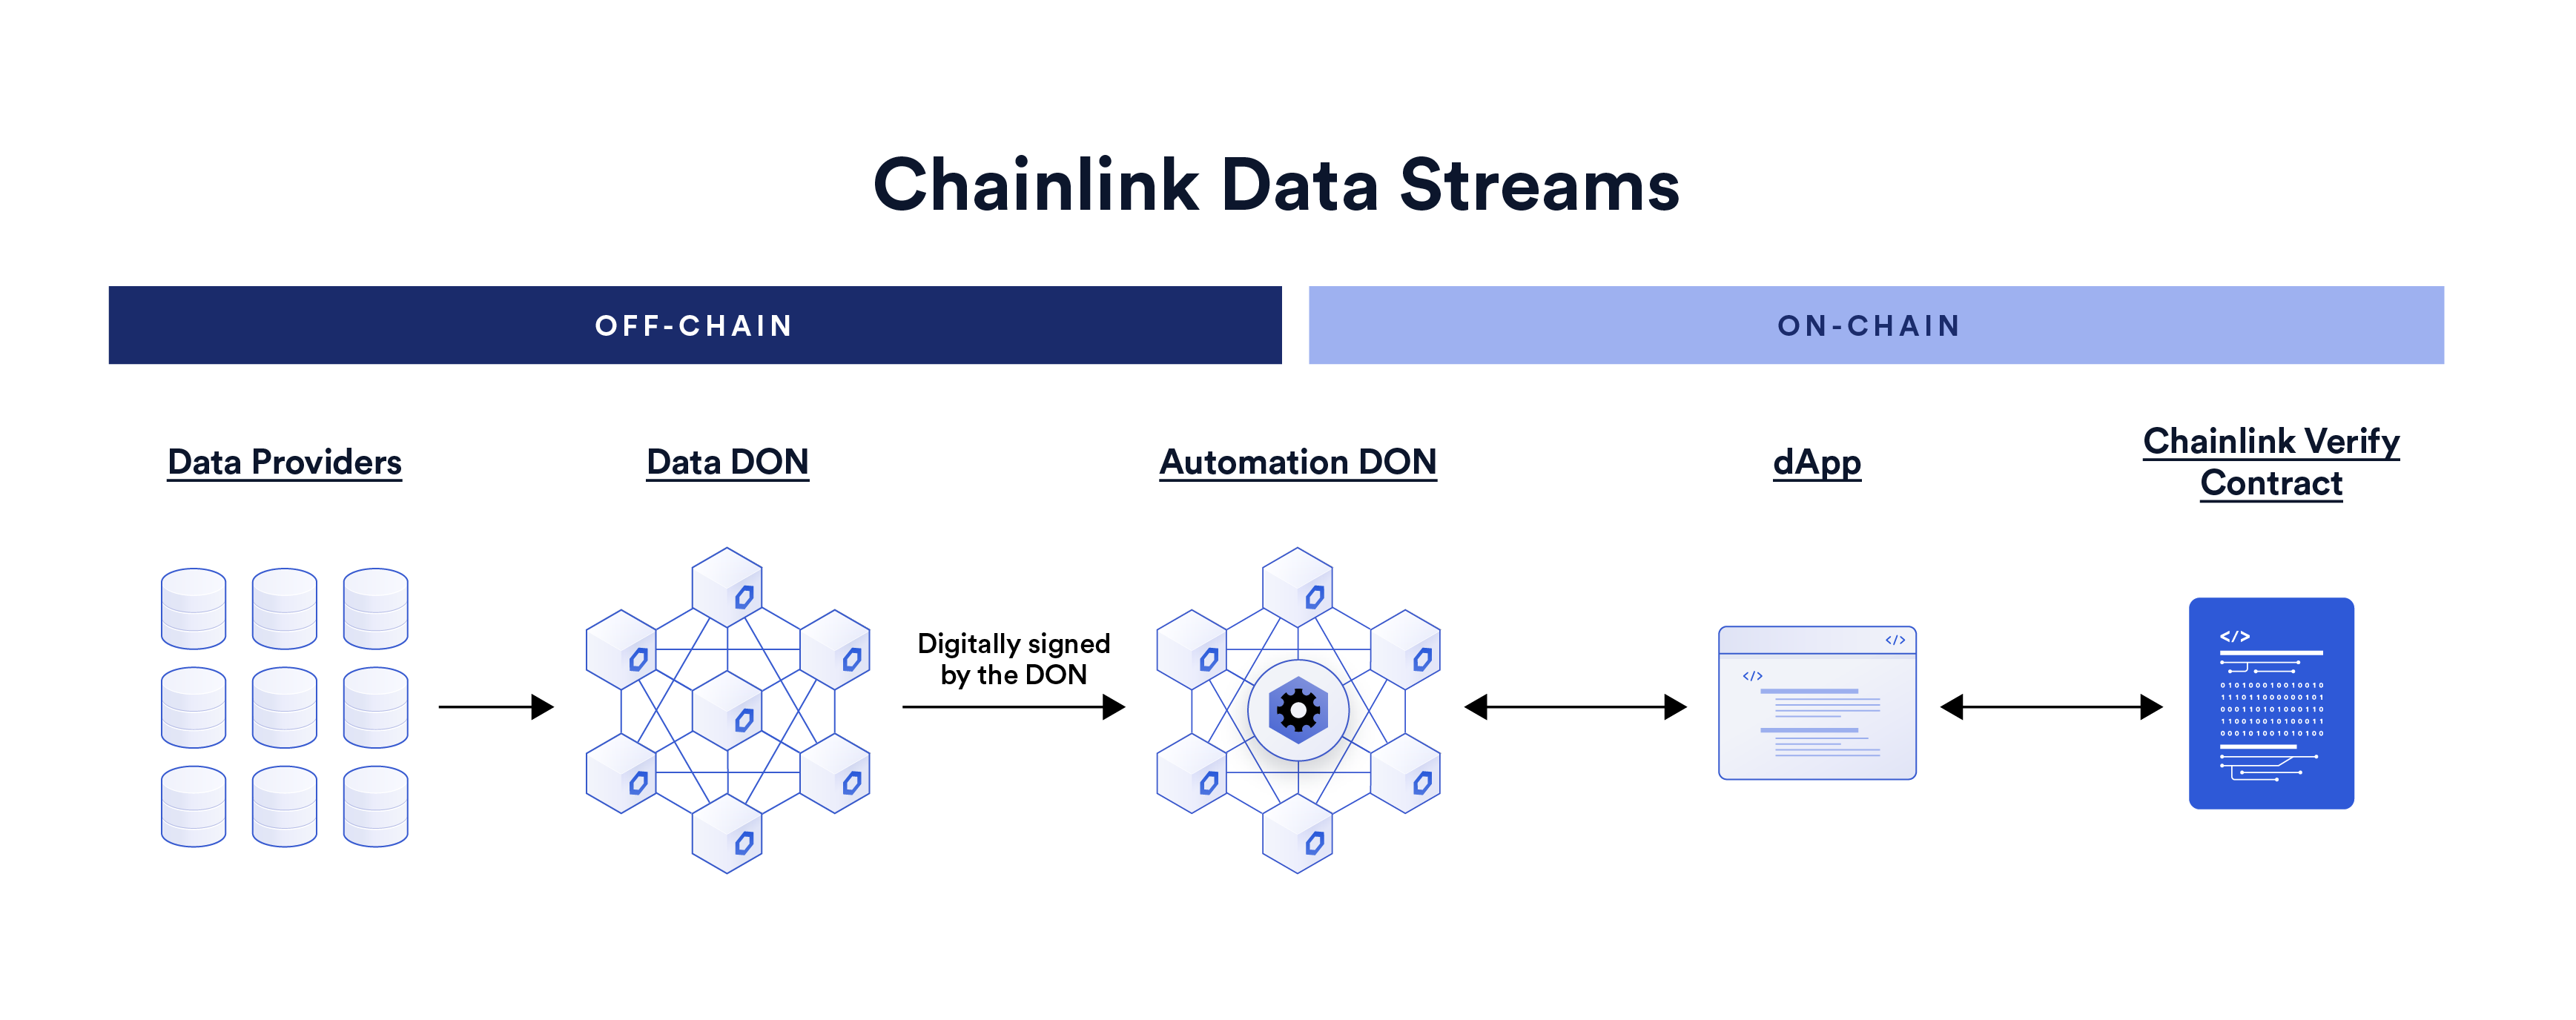 Chainlink Data Streams